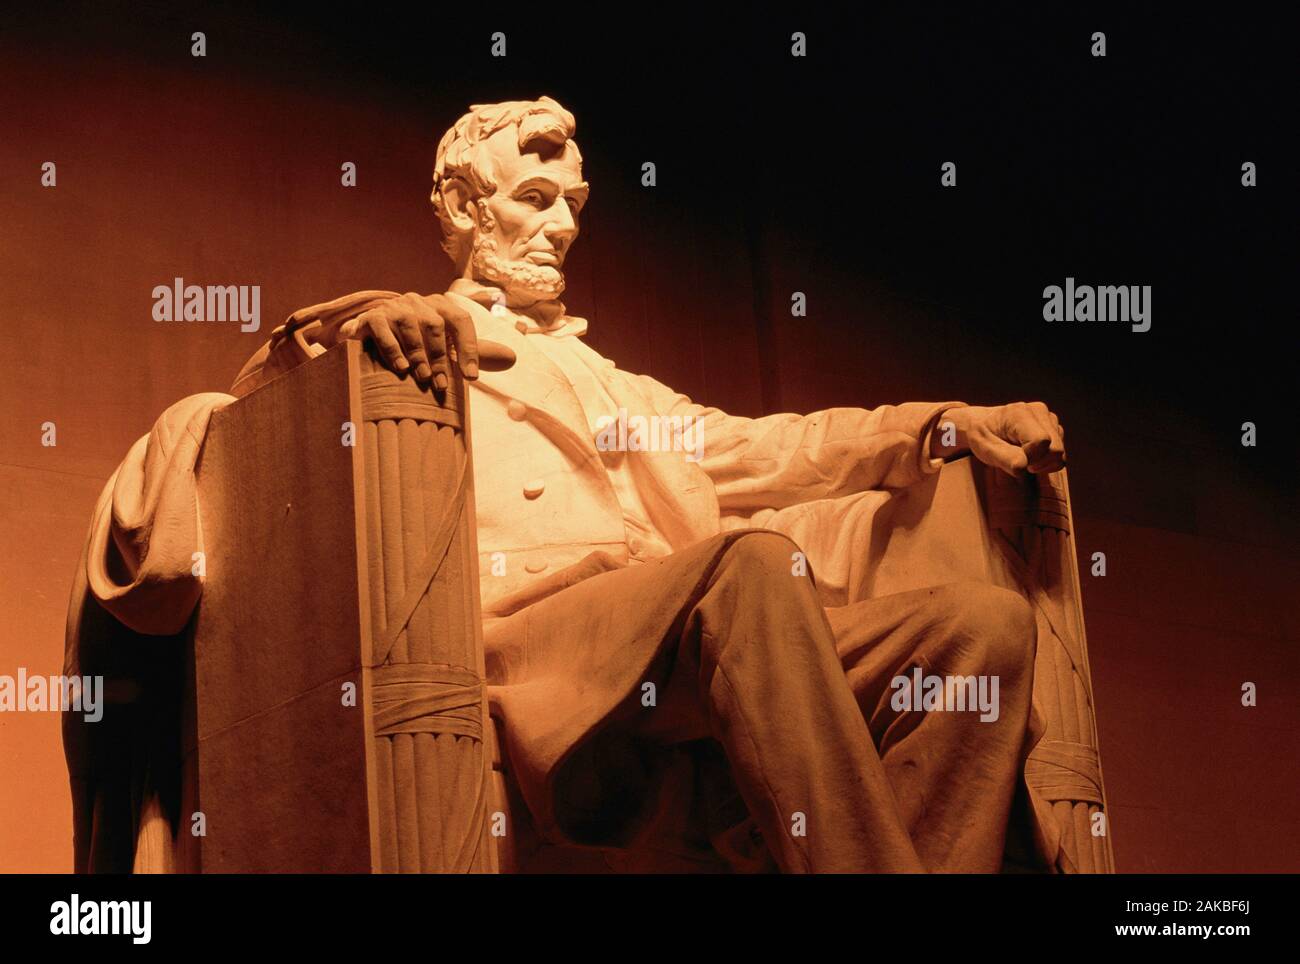 Statue of Abraham Lincoln at Lincoln Memorial, Washington DC, USA Stock Photo